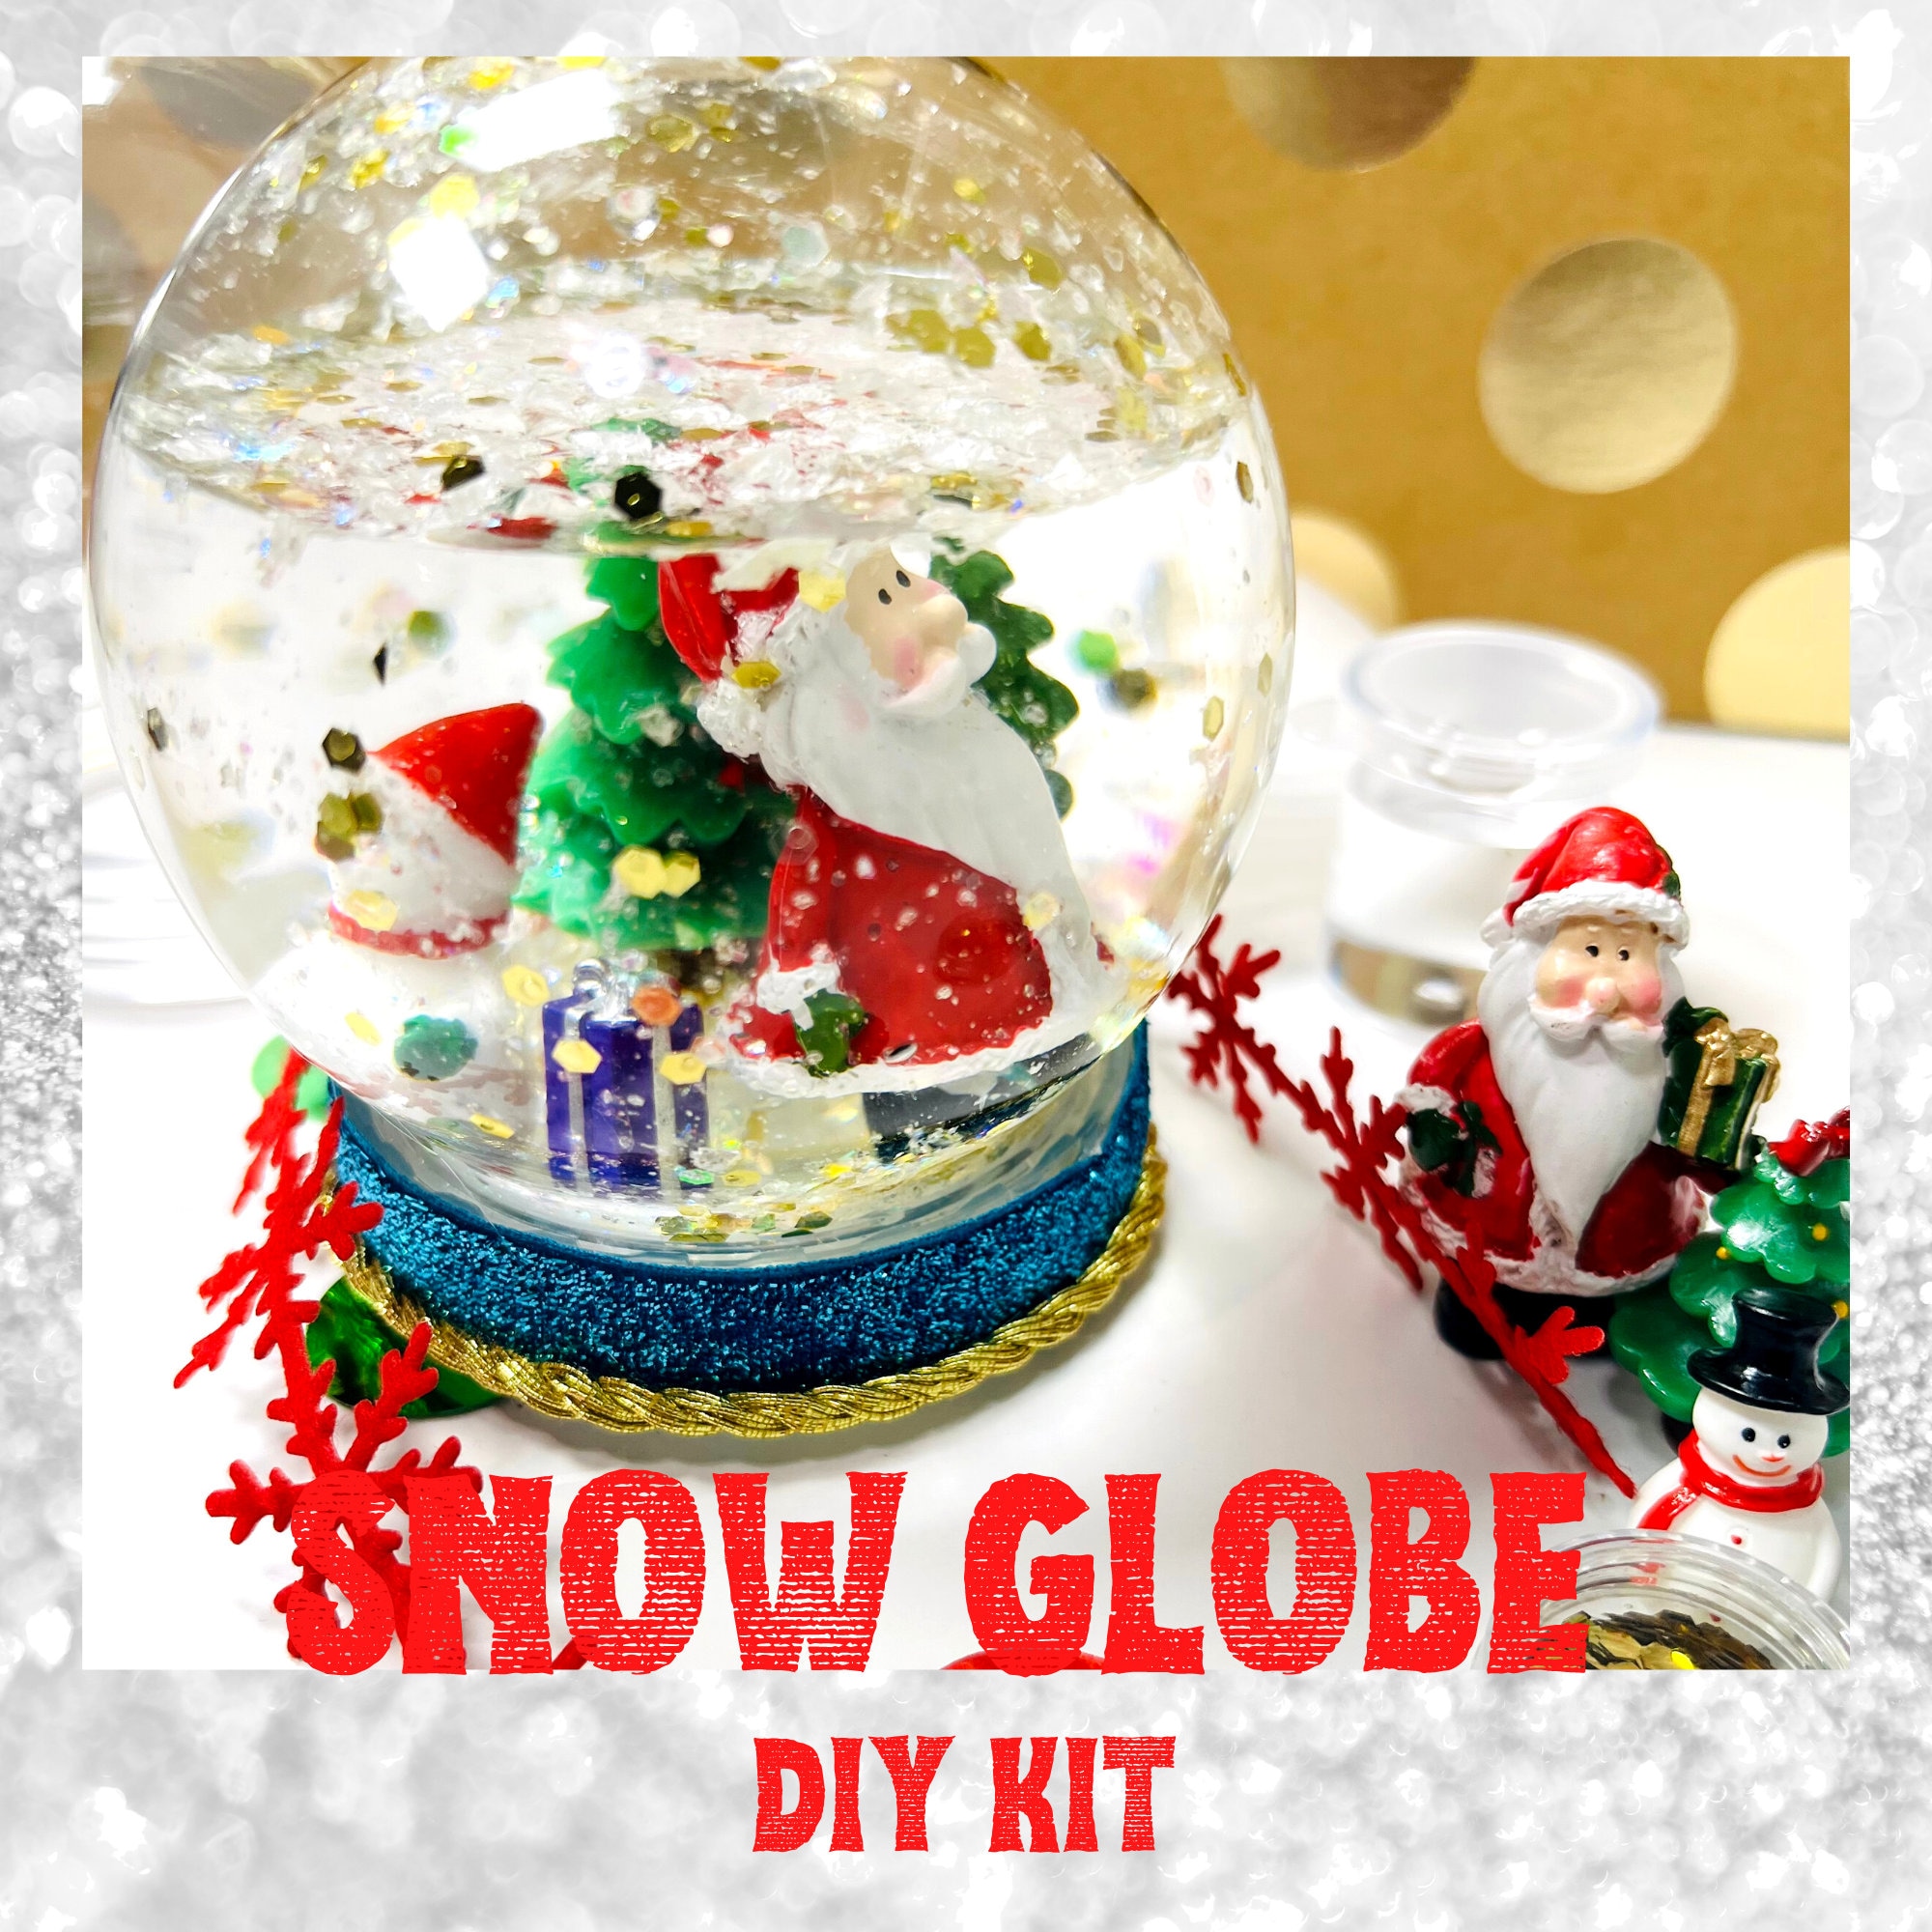 Snow Globe DIY KIT 